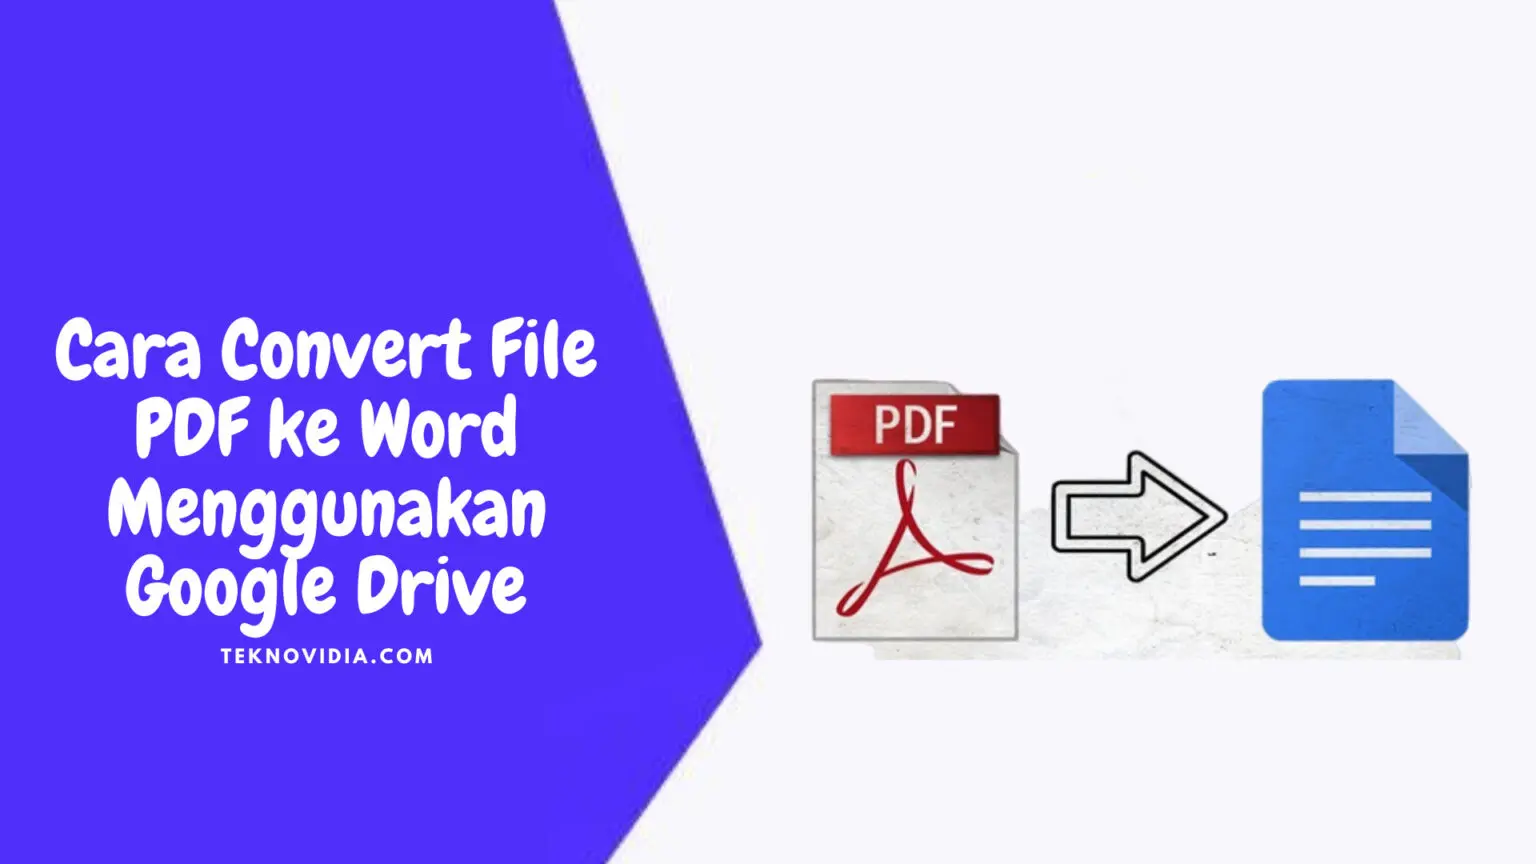 Cara Convert File PDF ke Word Menggunakan Google Drive